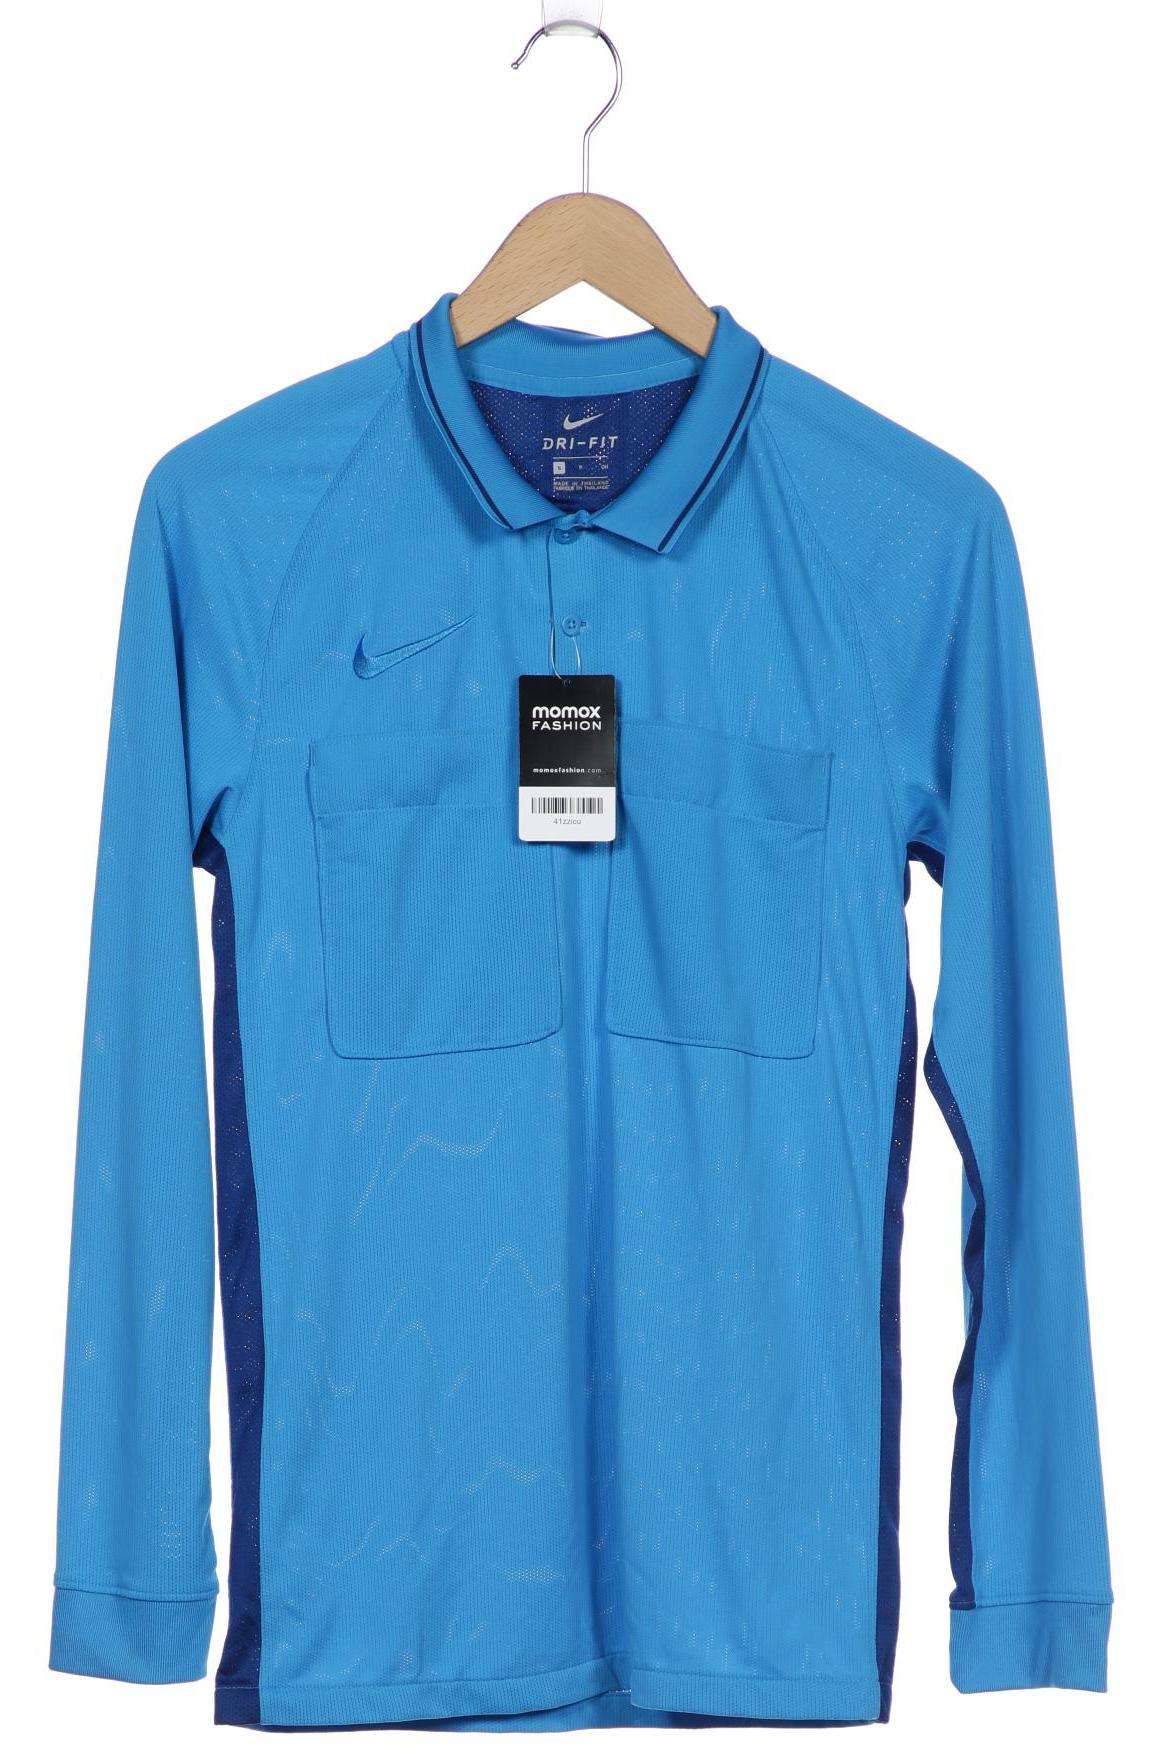 Nike Herren Poloshirt, blau, Gr. 46 von Nike